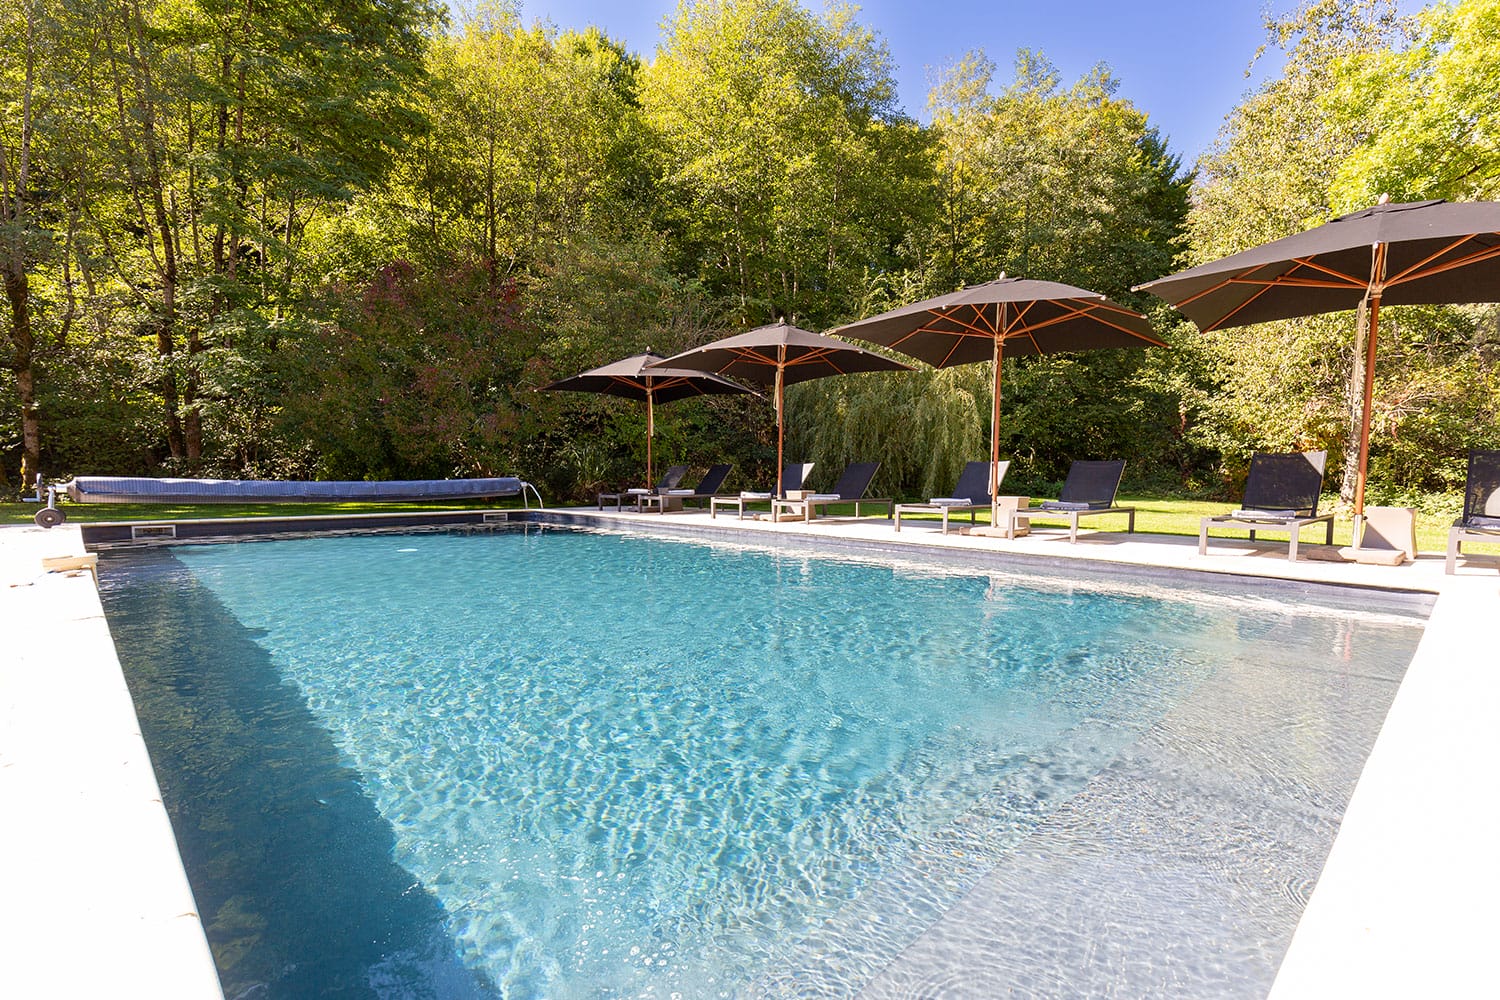 Heated pool of Dordogne gite